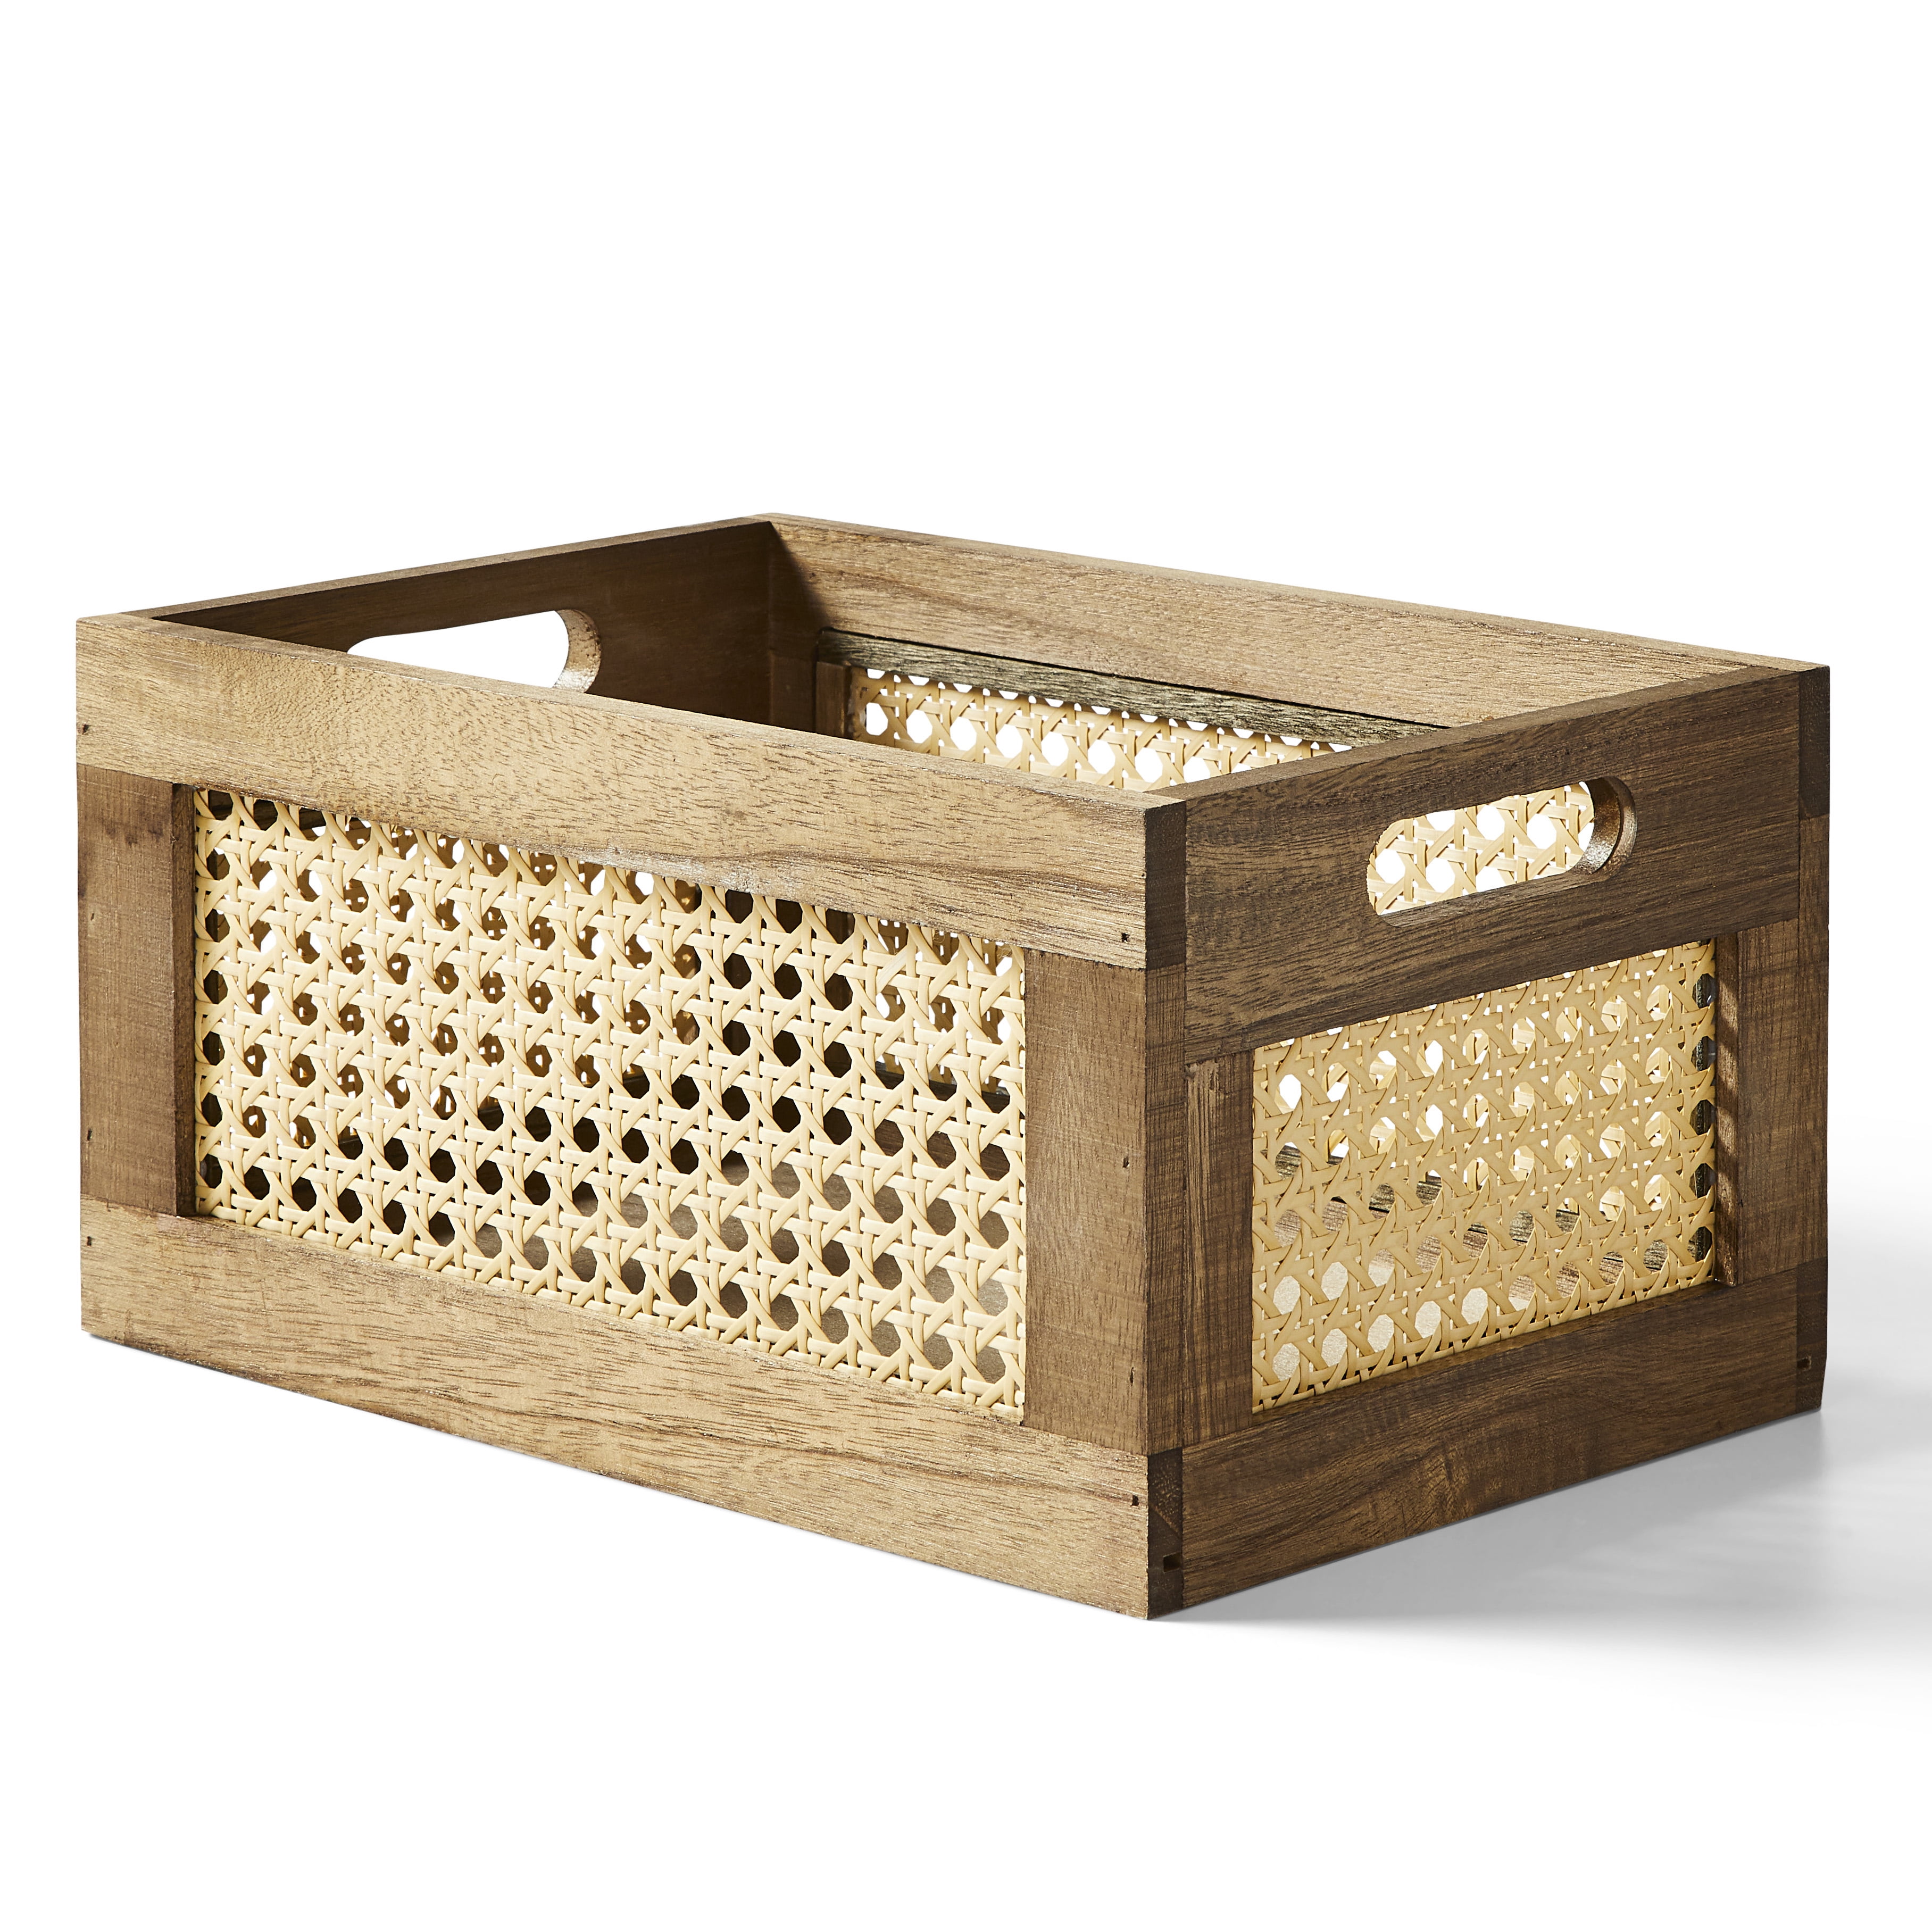 Items 1Pc Tiny Soap Kitchen Basket Home Family Organizer Gadget Storage Shelf